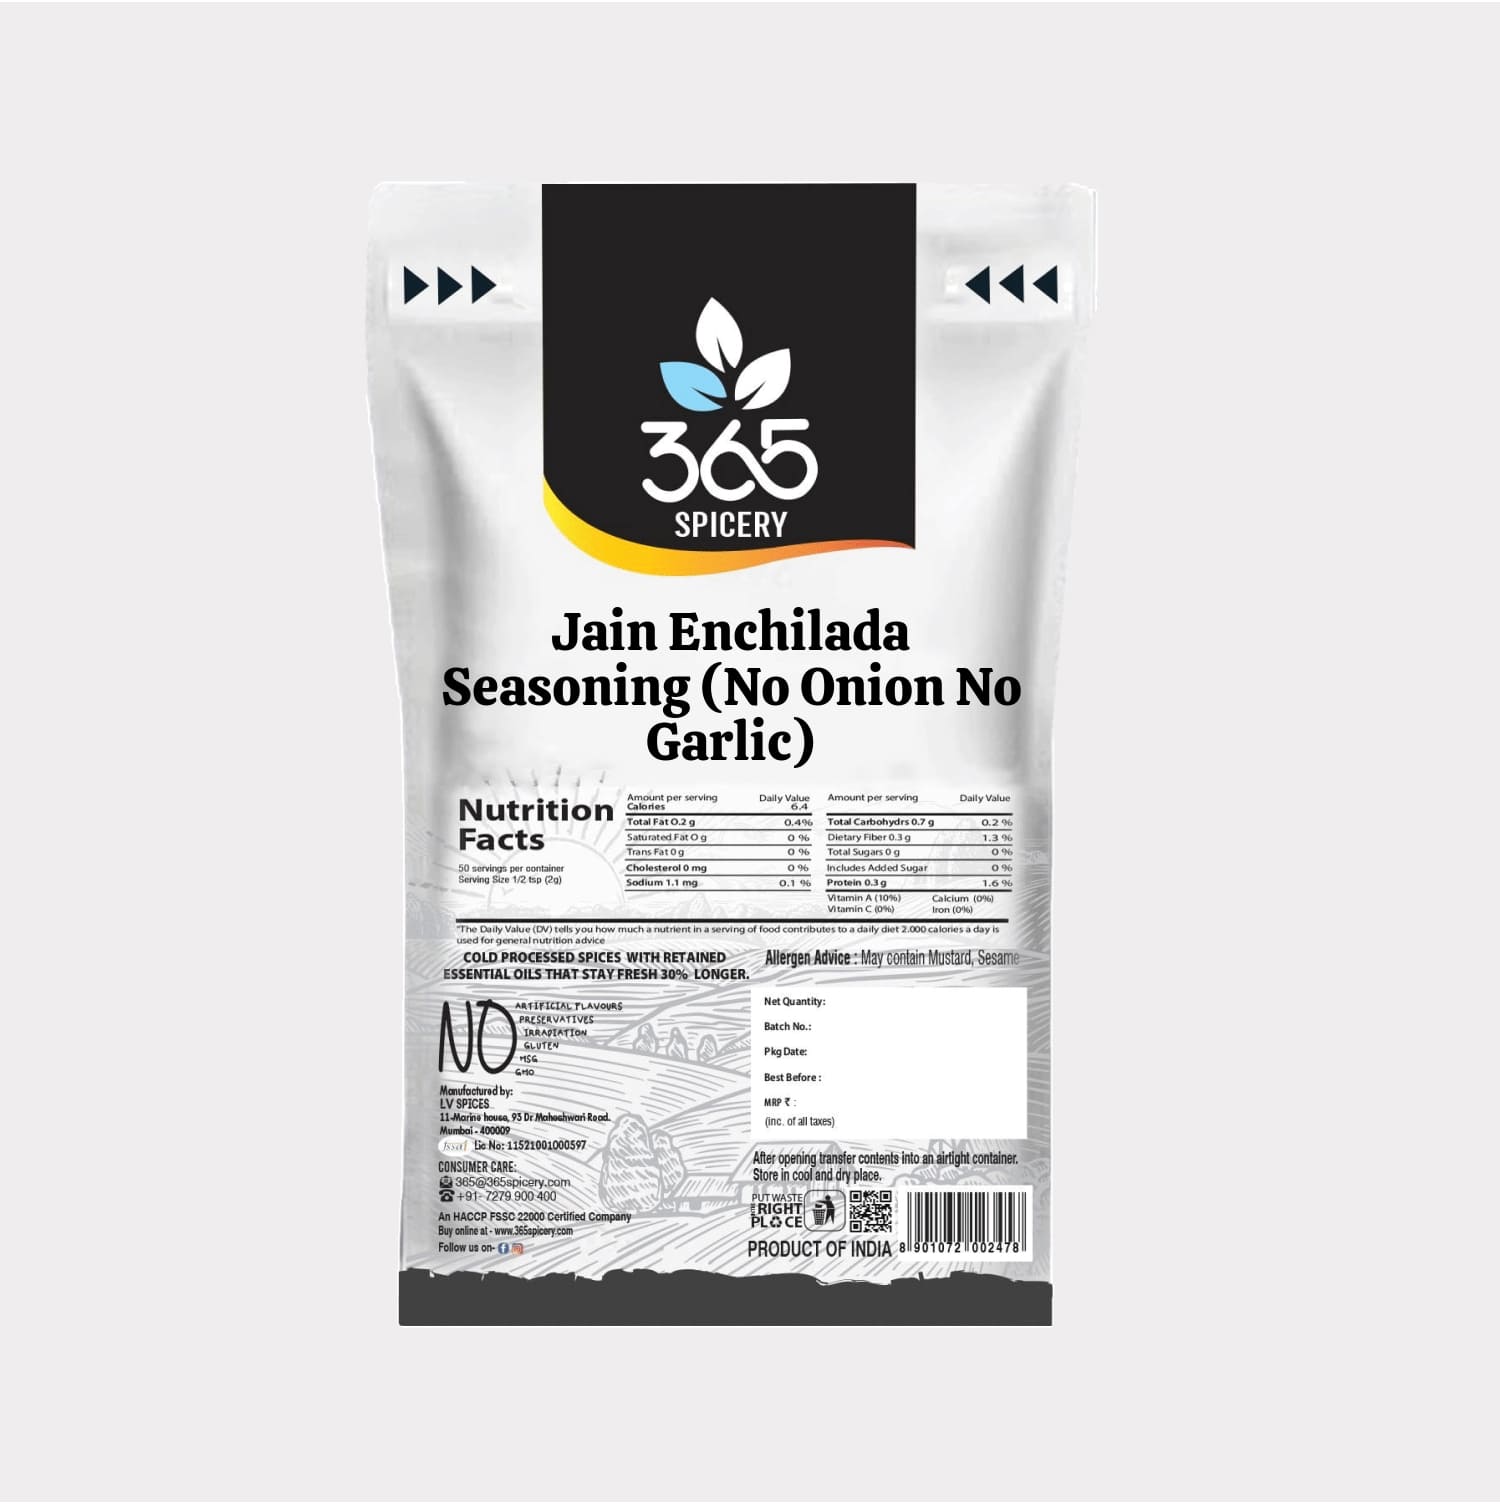 Jain Enchilada Seasoning (No Onion No Garlic)